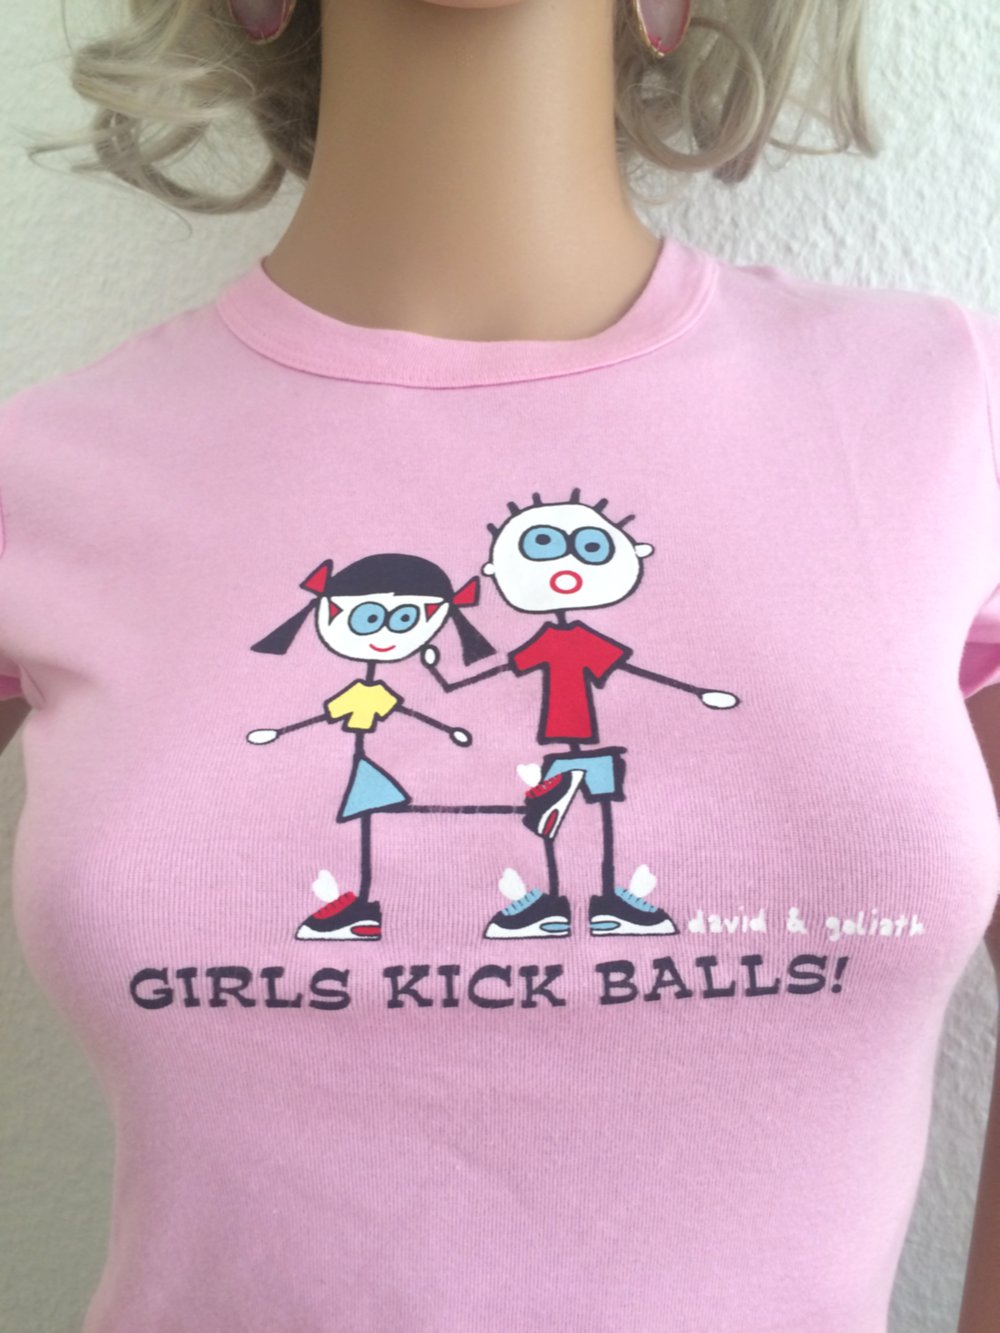 Balls girls kick First time